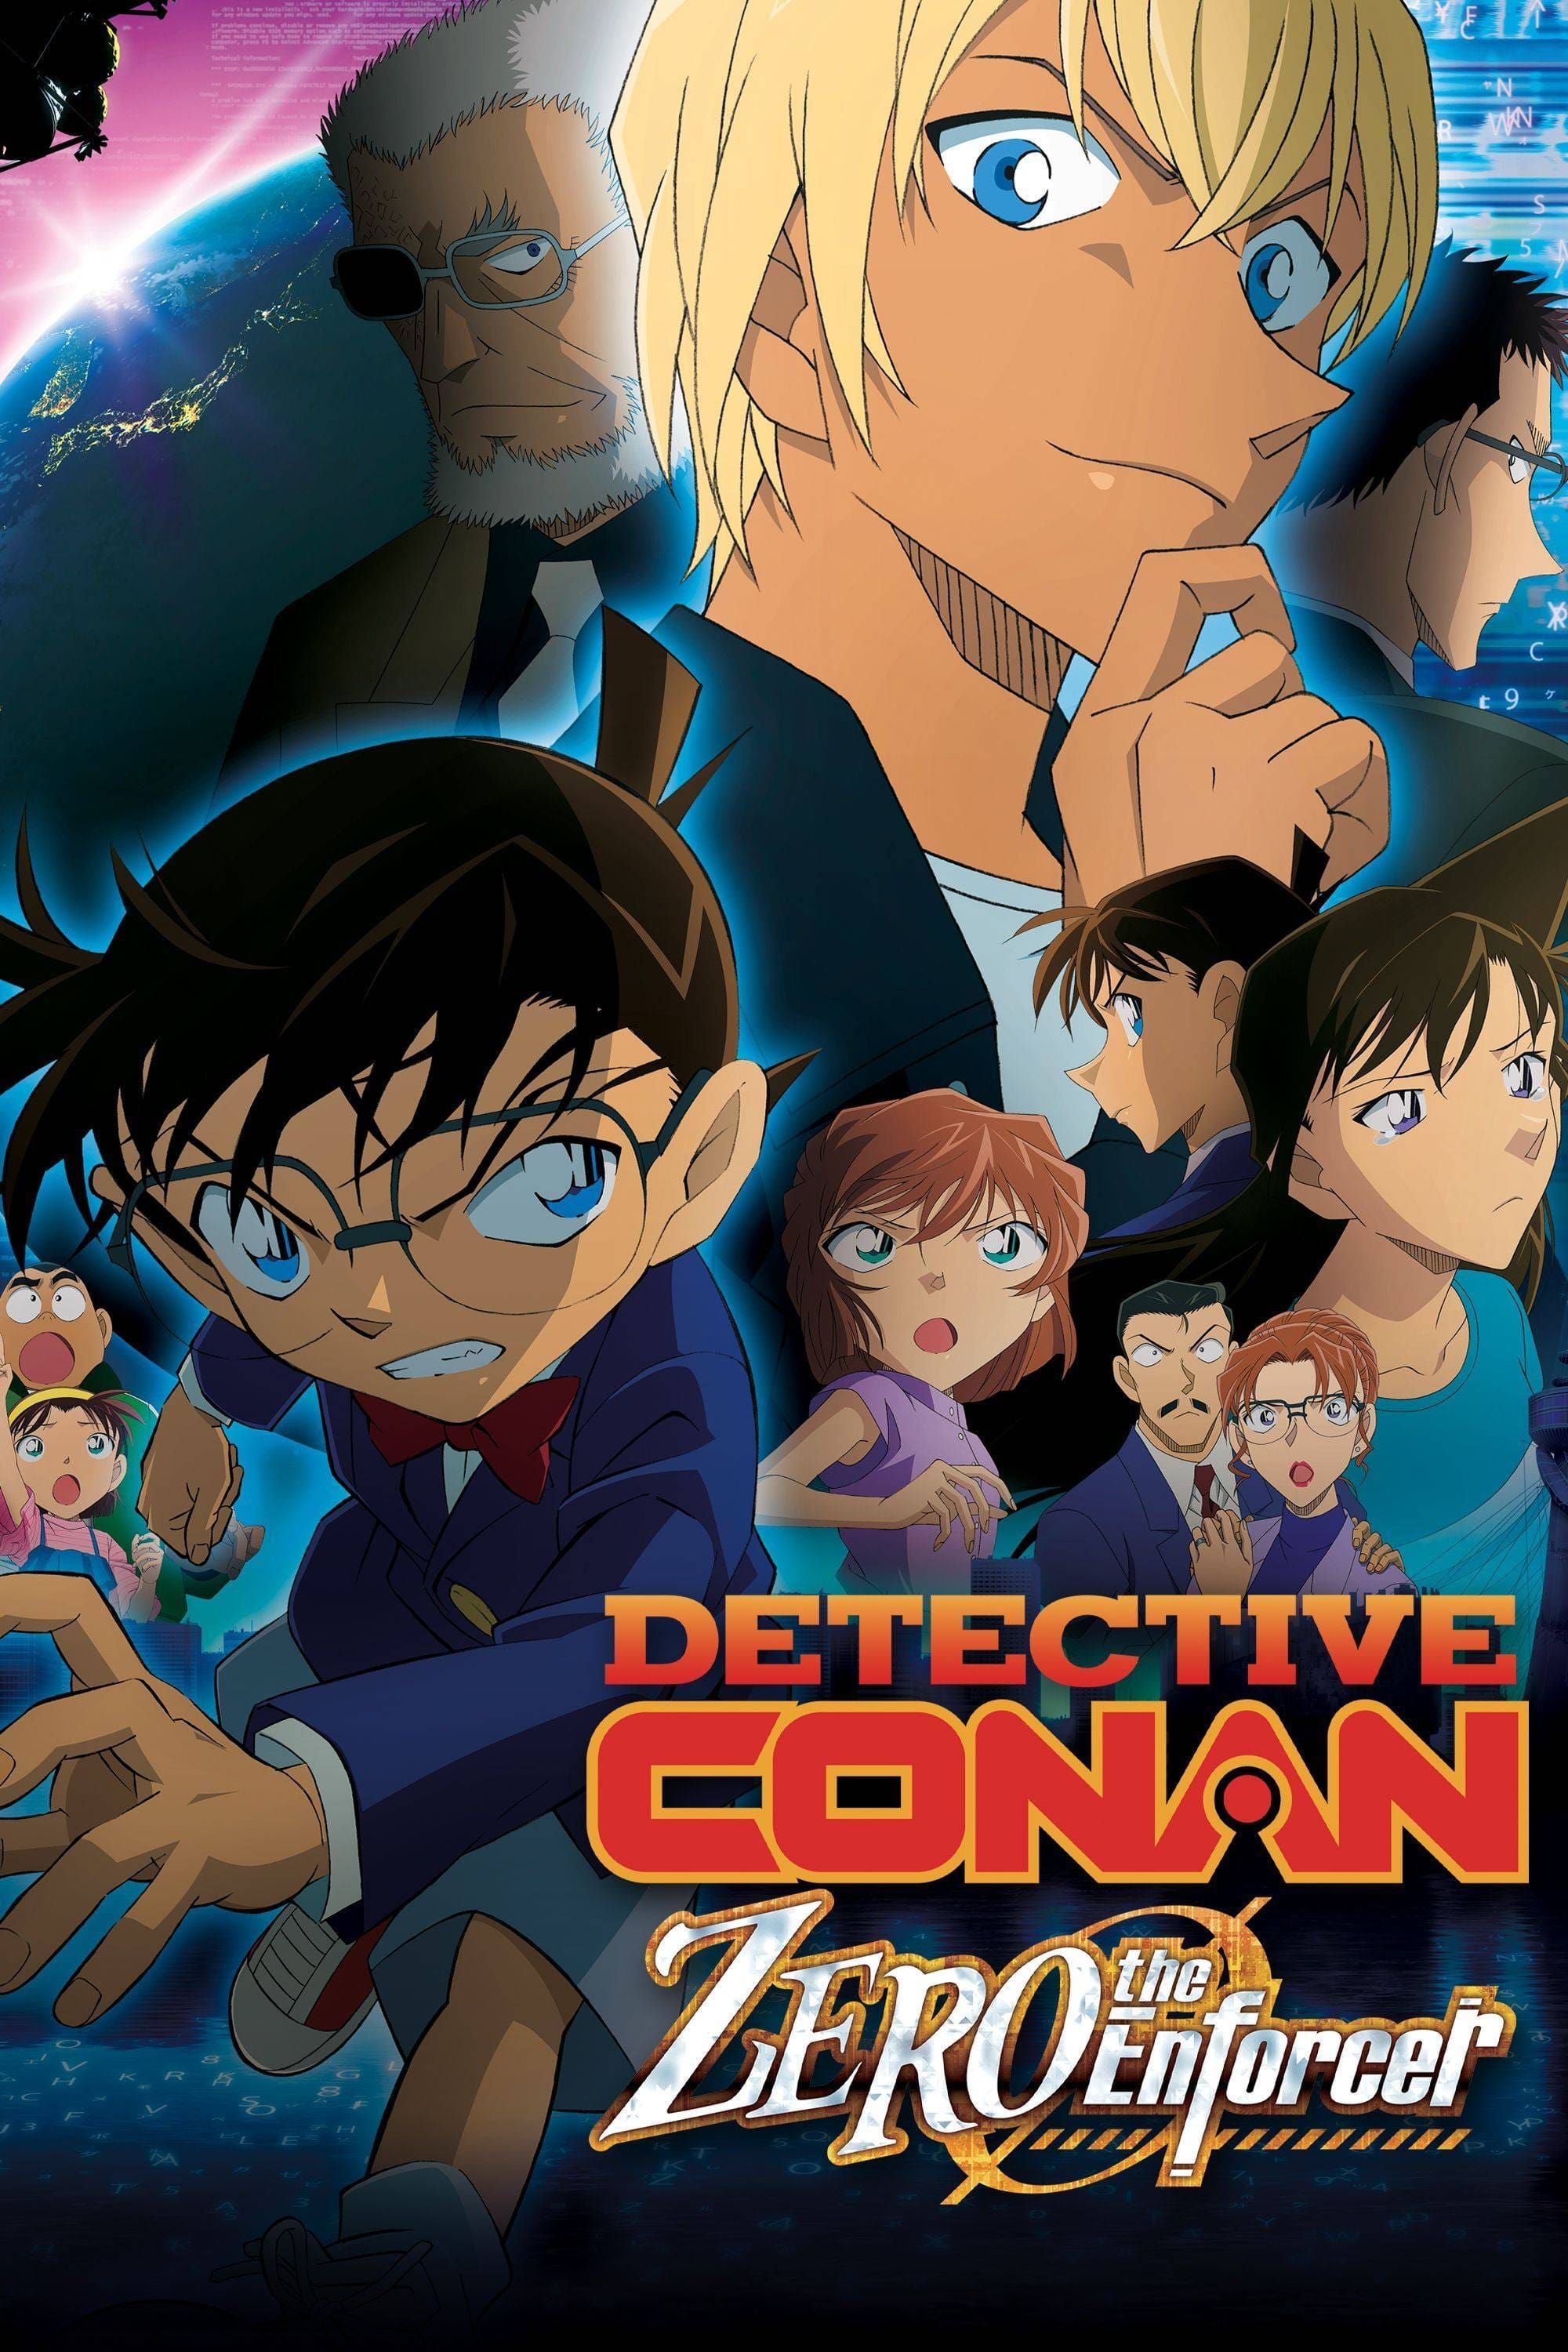 Detective Conan: Zero the Enforcer (2018)